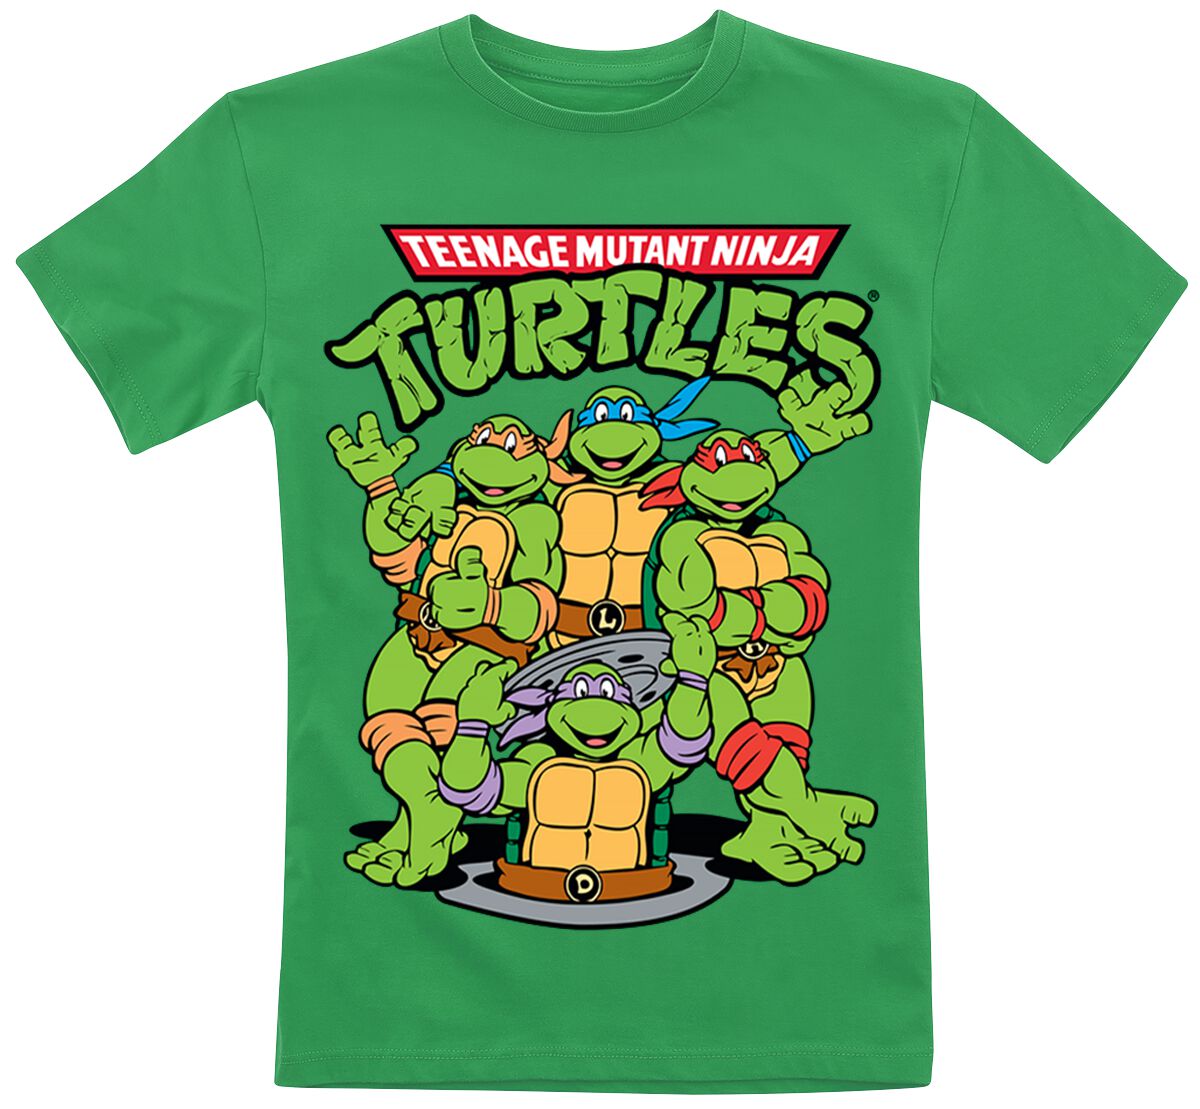 Teenage Mutant Ninja Turtles Kids - Group T-Shirt grün in 116